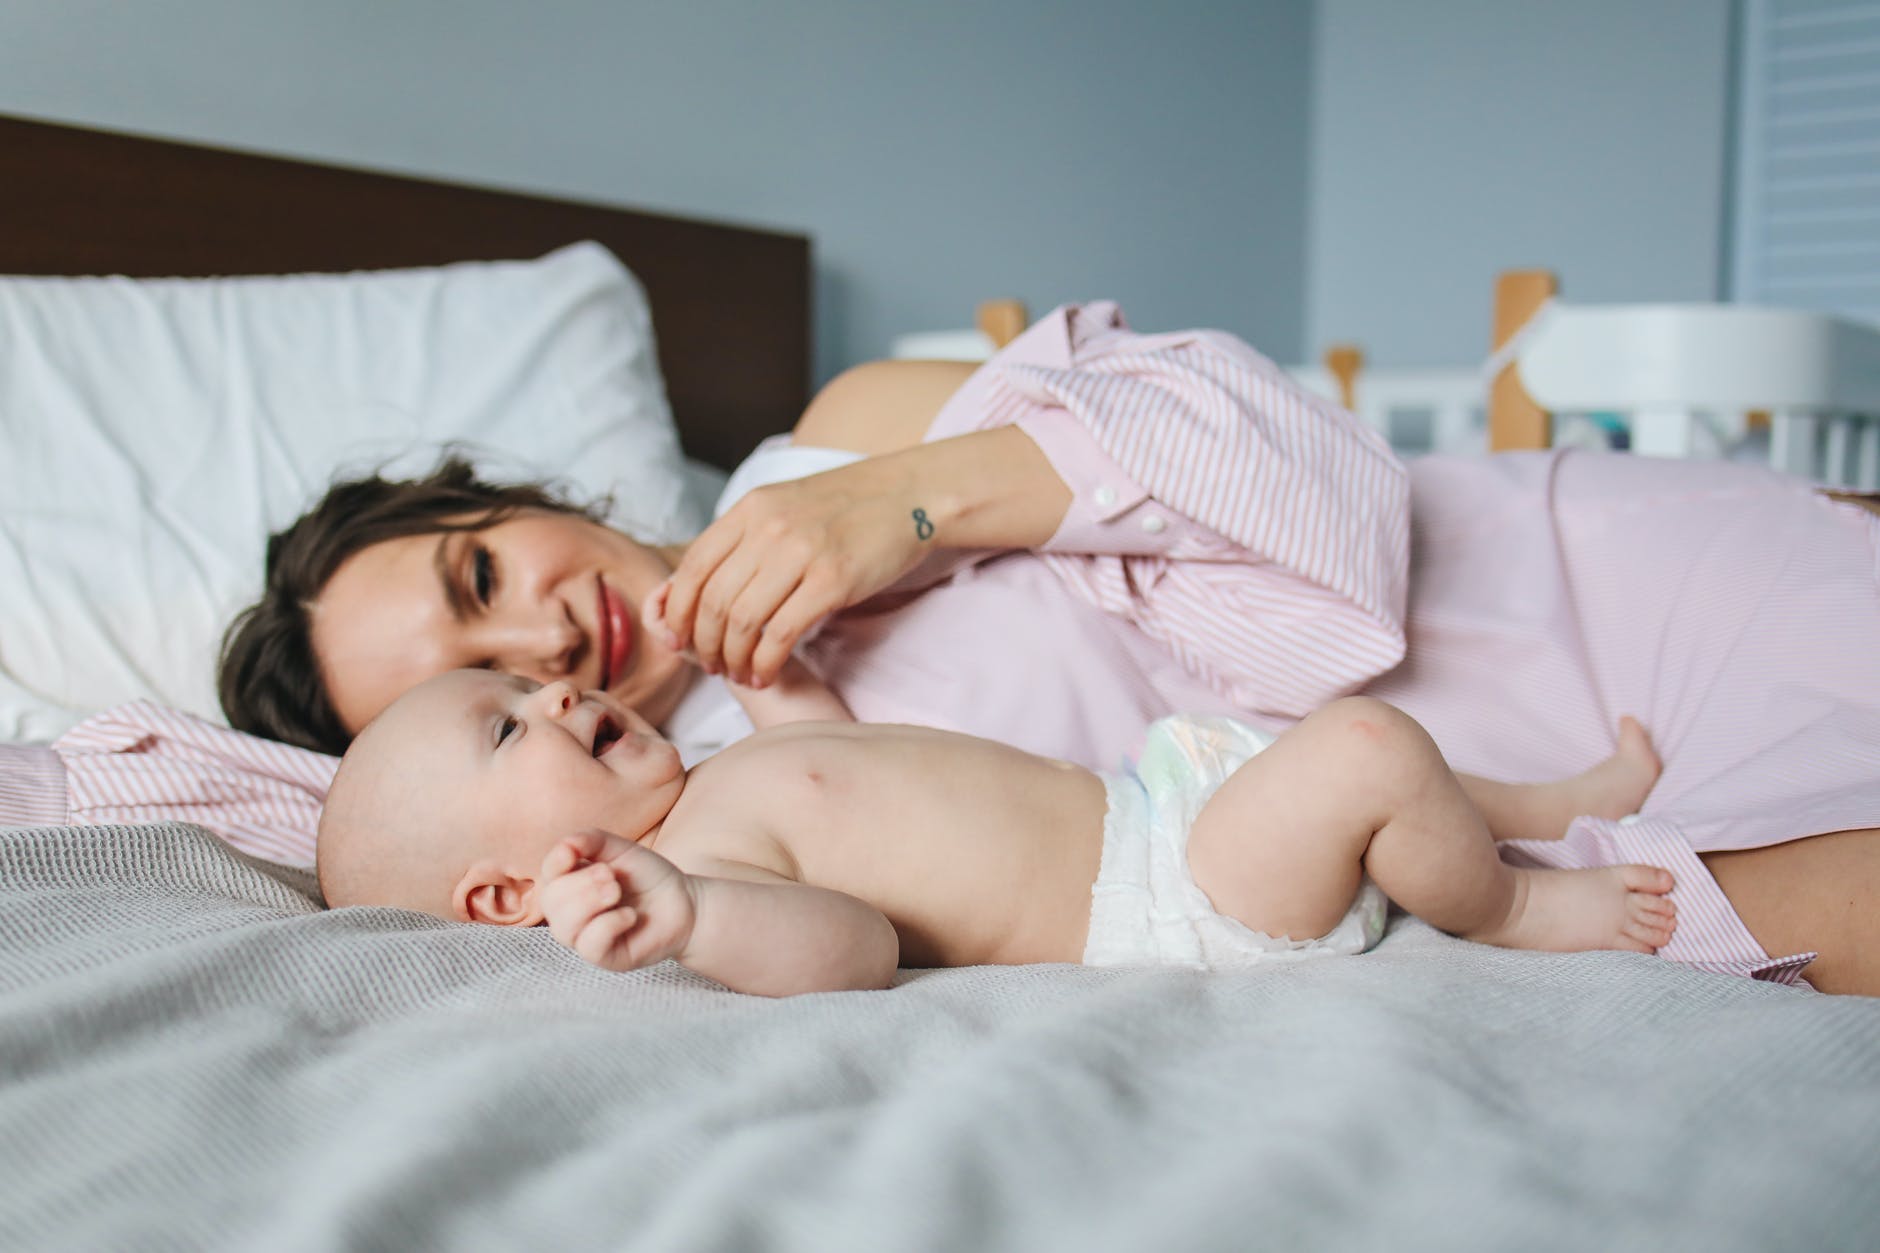 Pismo najvažnijem muškarcu u mom životu - mom sinu , woman in pink dress lying on bed next to baby in diapers